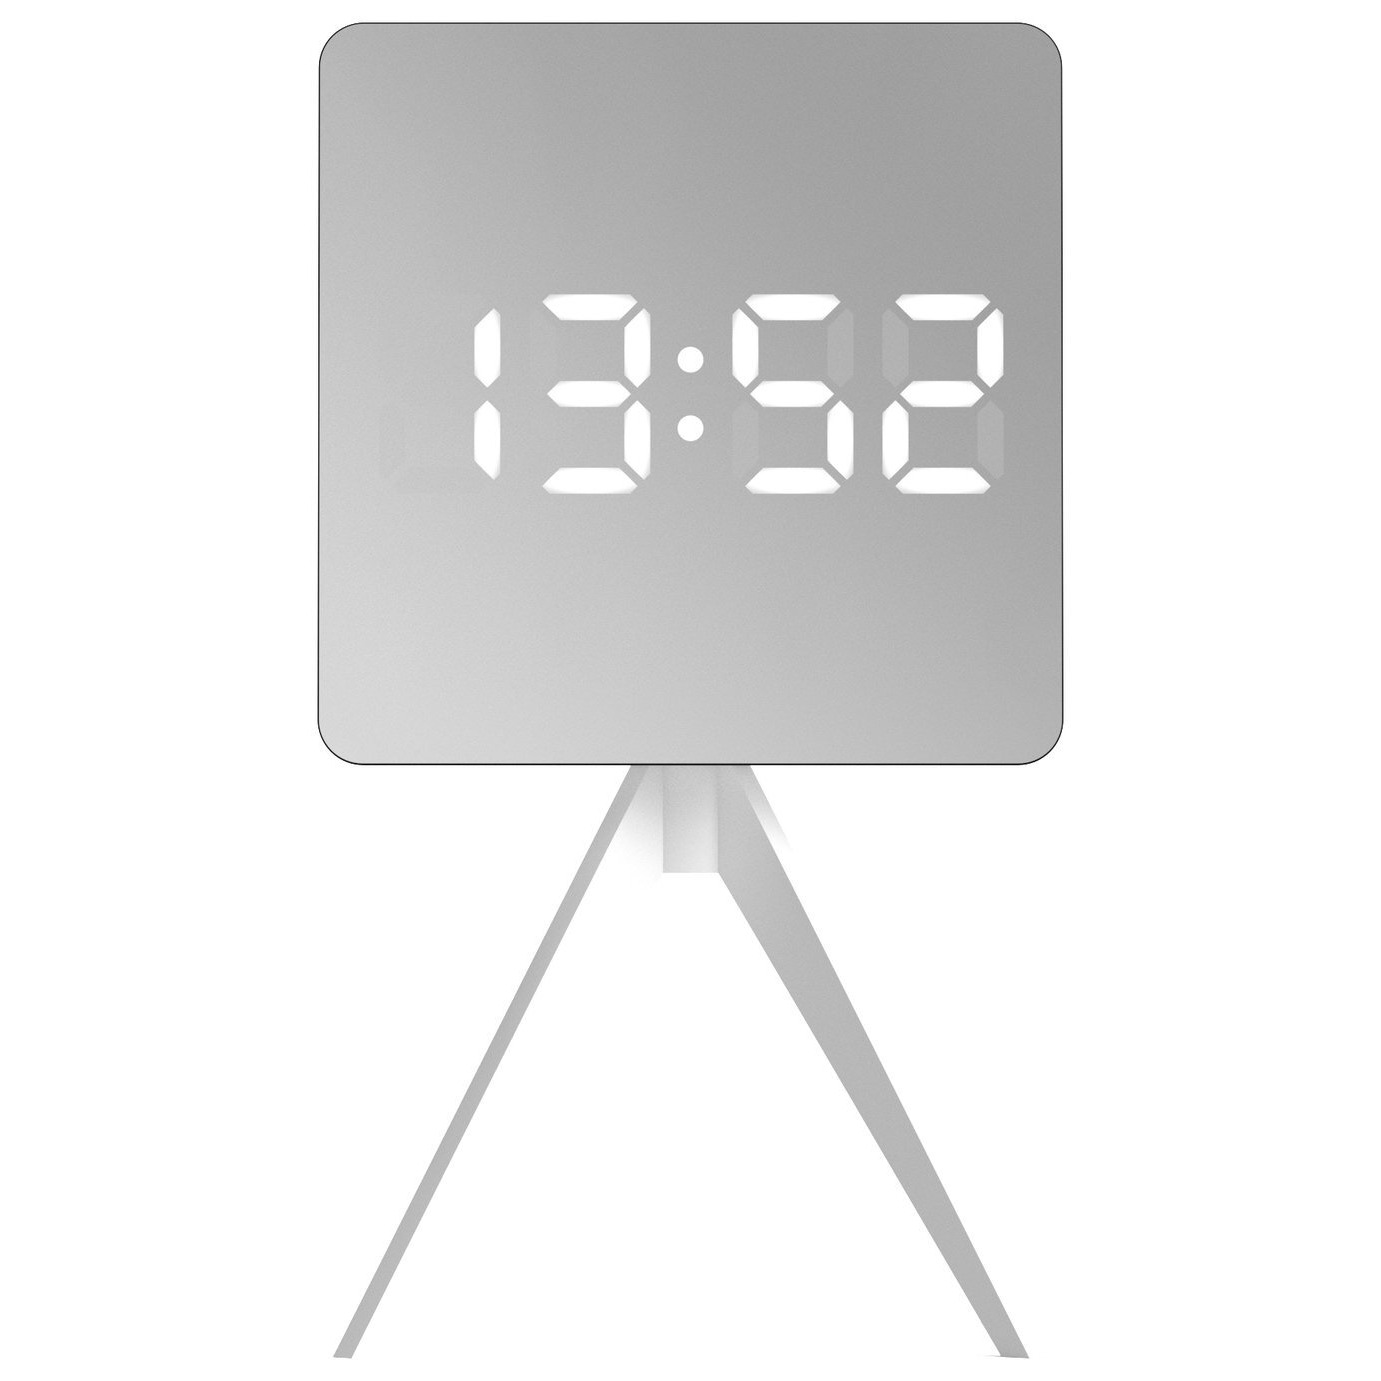 Space Hotel Droid LED Digital Alarm Clock - Silver - image 1